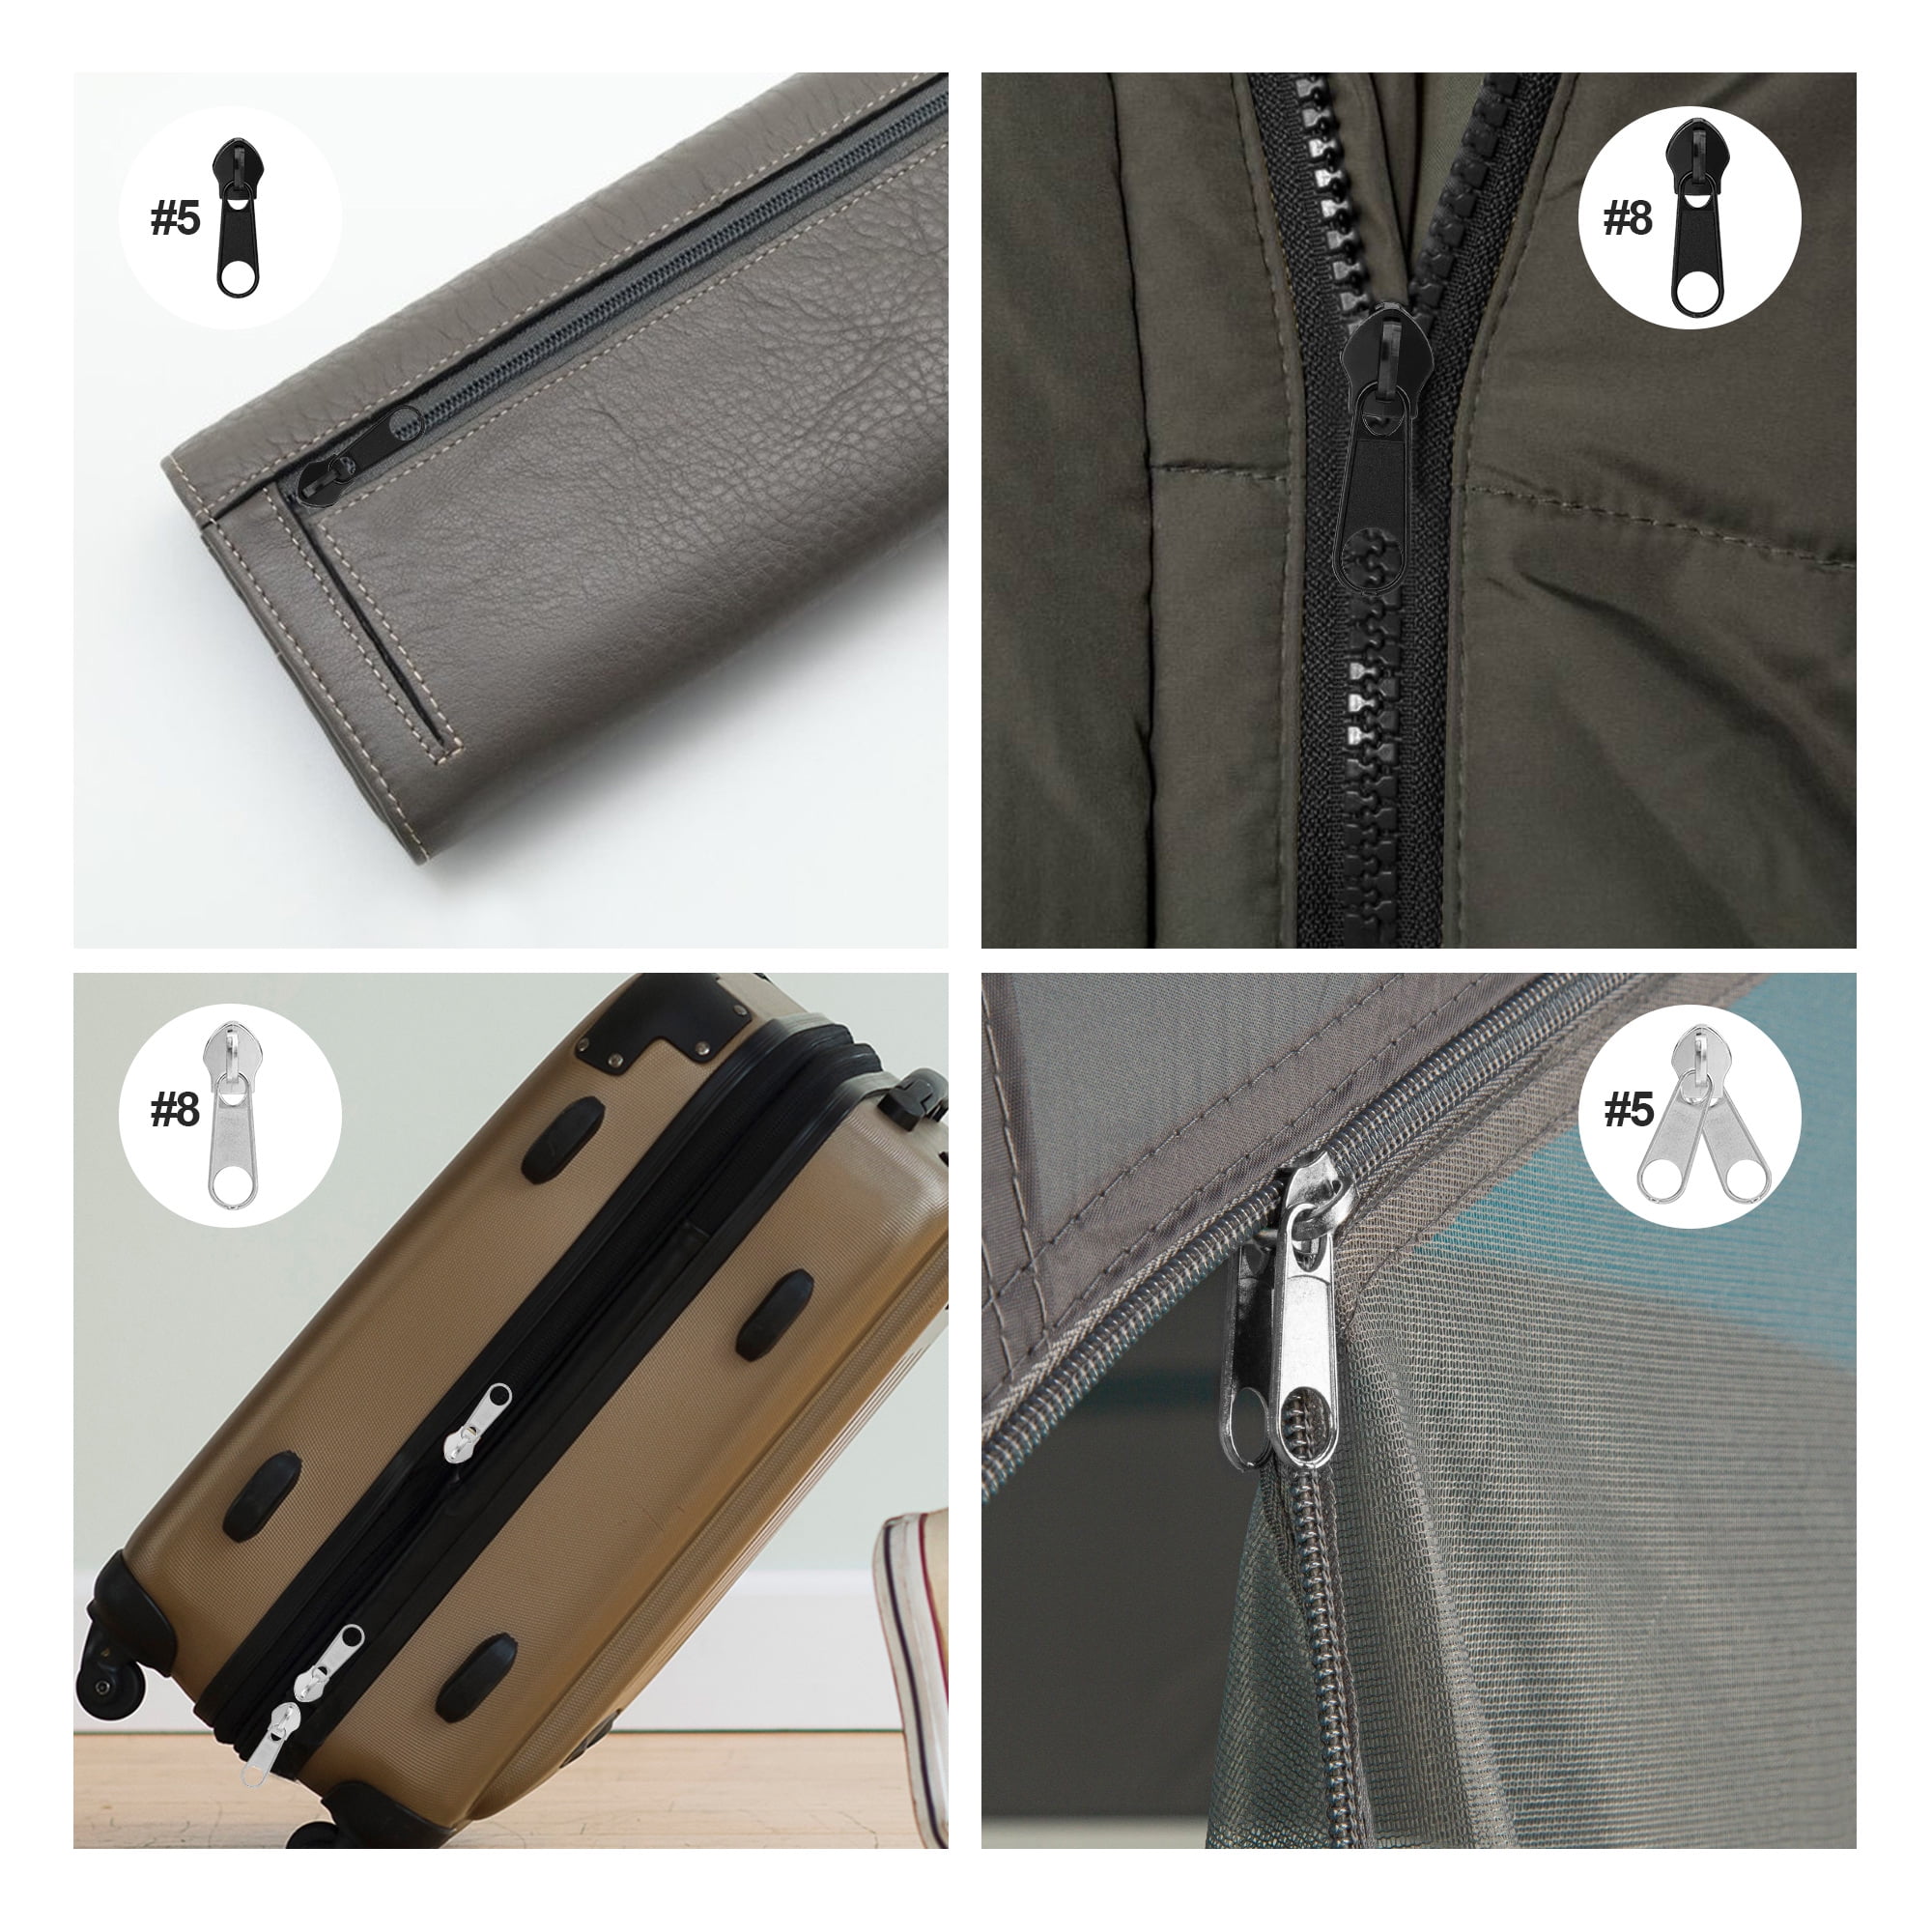 32 Pieces Zipper Repair Kit Includes 16 Zipper Pull Tab Replacement Zipper  Handle Mend Fixer Zipper Extenders Zipper Sliders 16 Zipper Tab Cord Pulls  for Backpacks, Jackets, Luggage, Purses, Handbags Arts, Crafts & Sewing